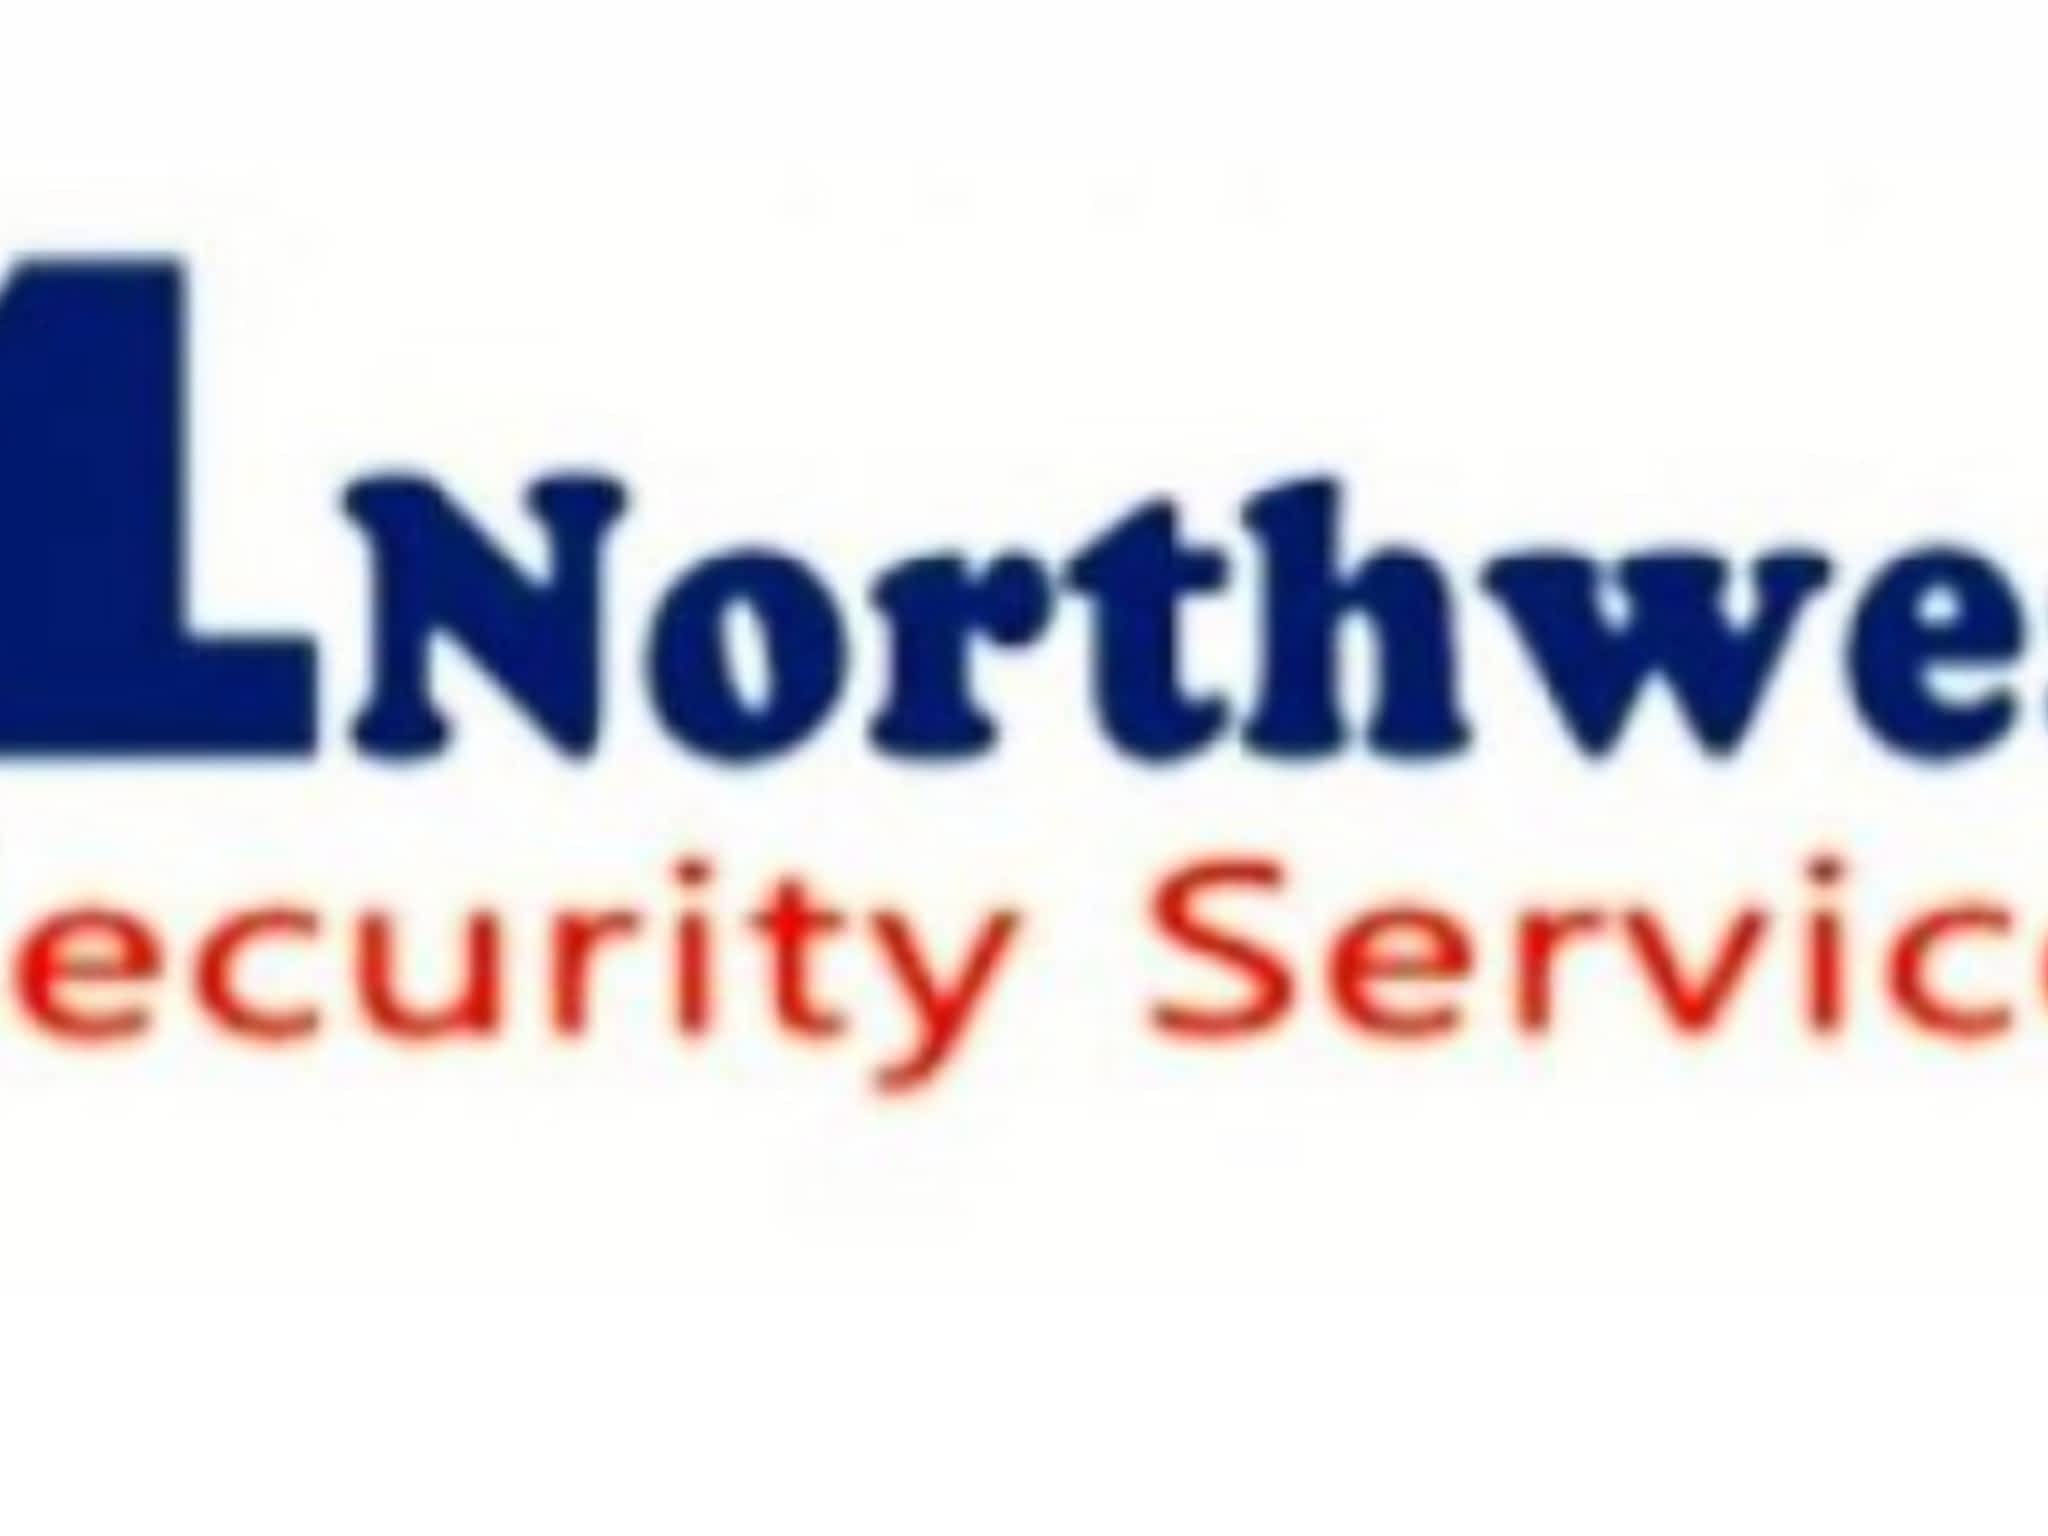 photo 1Northwest Security Services